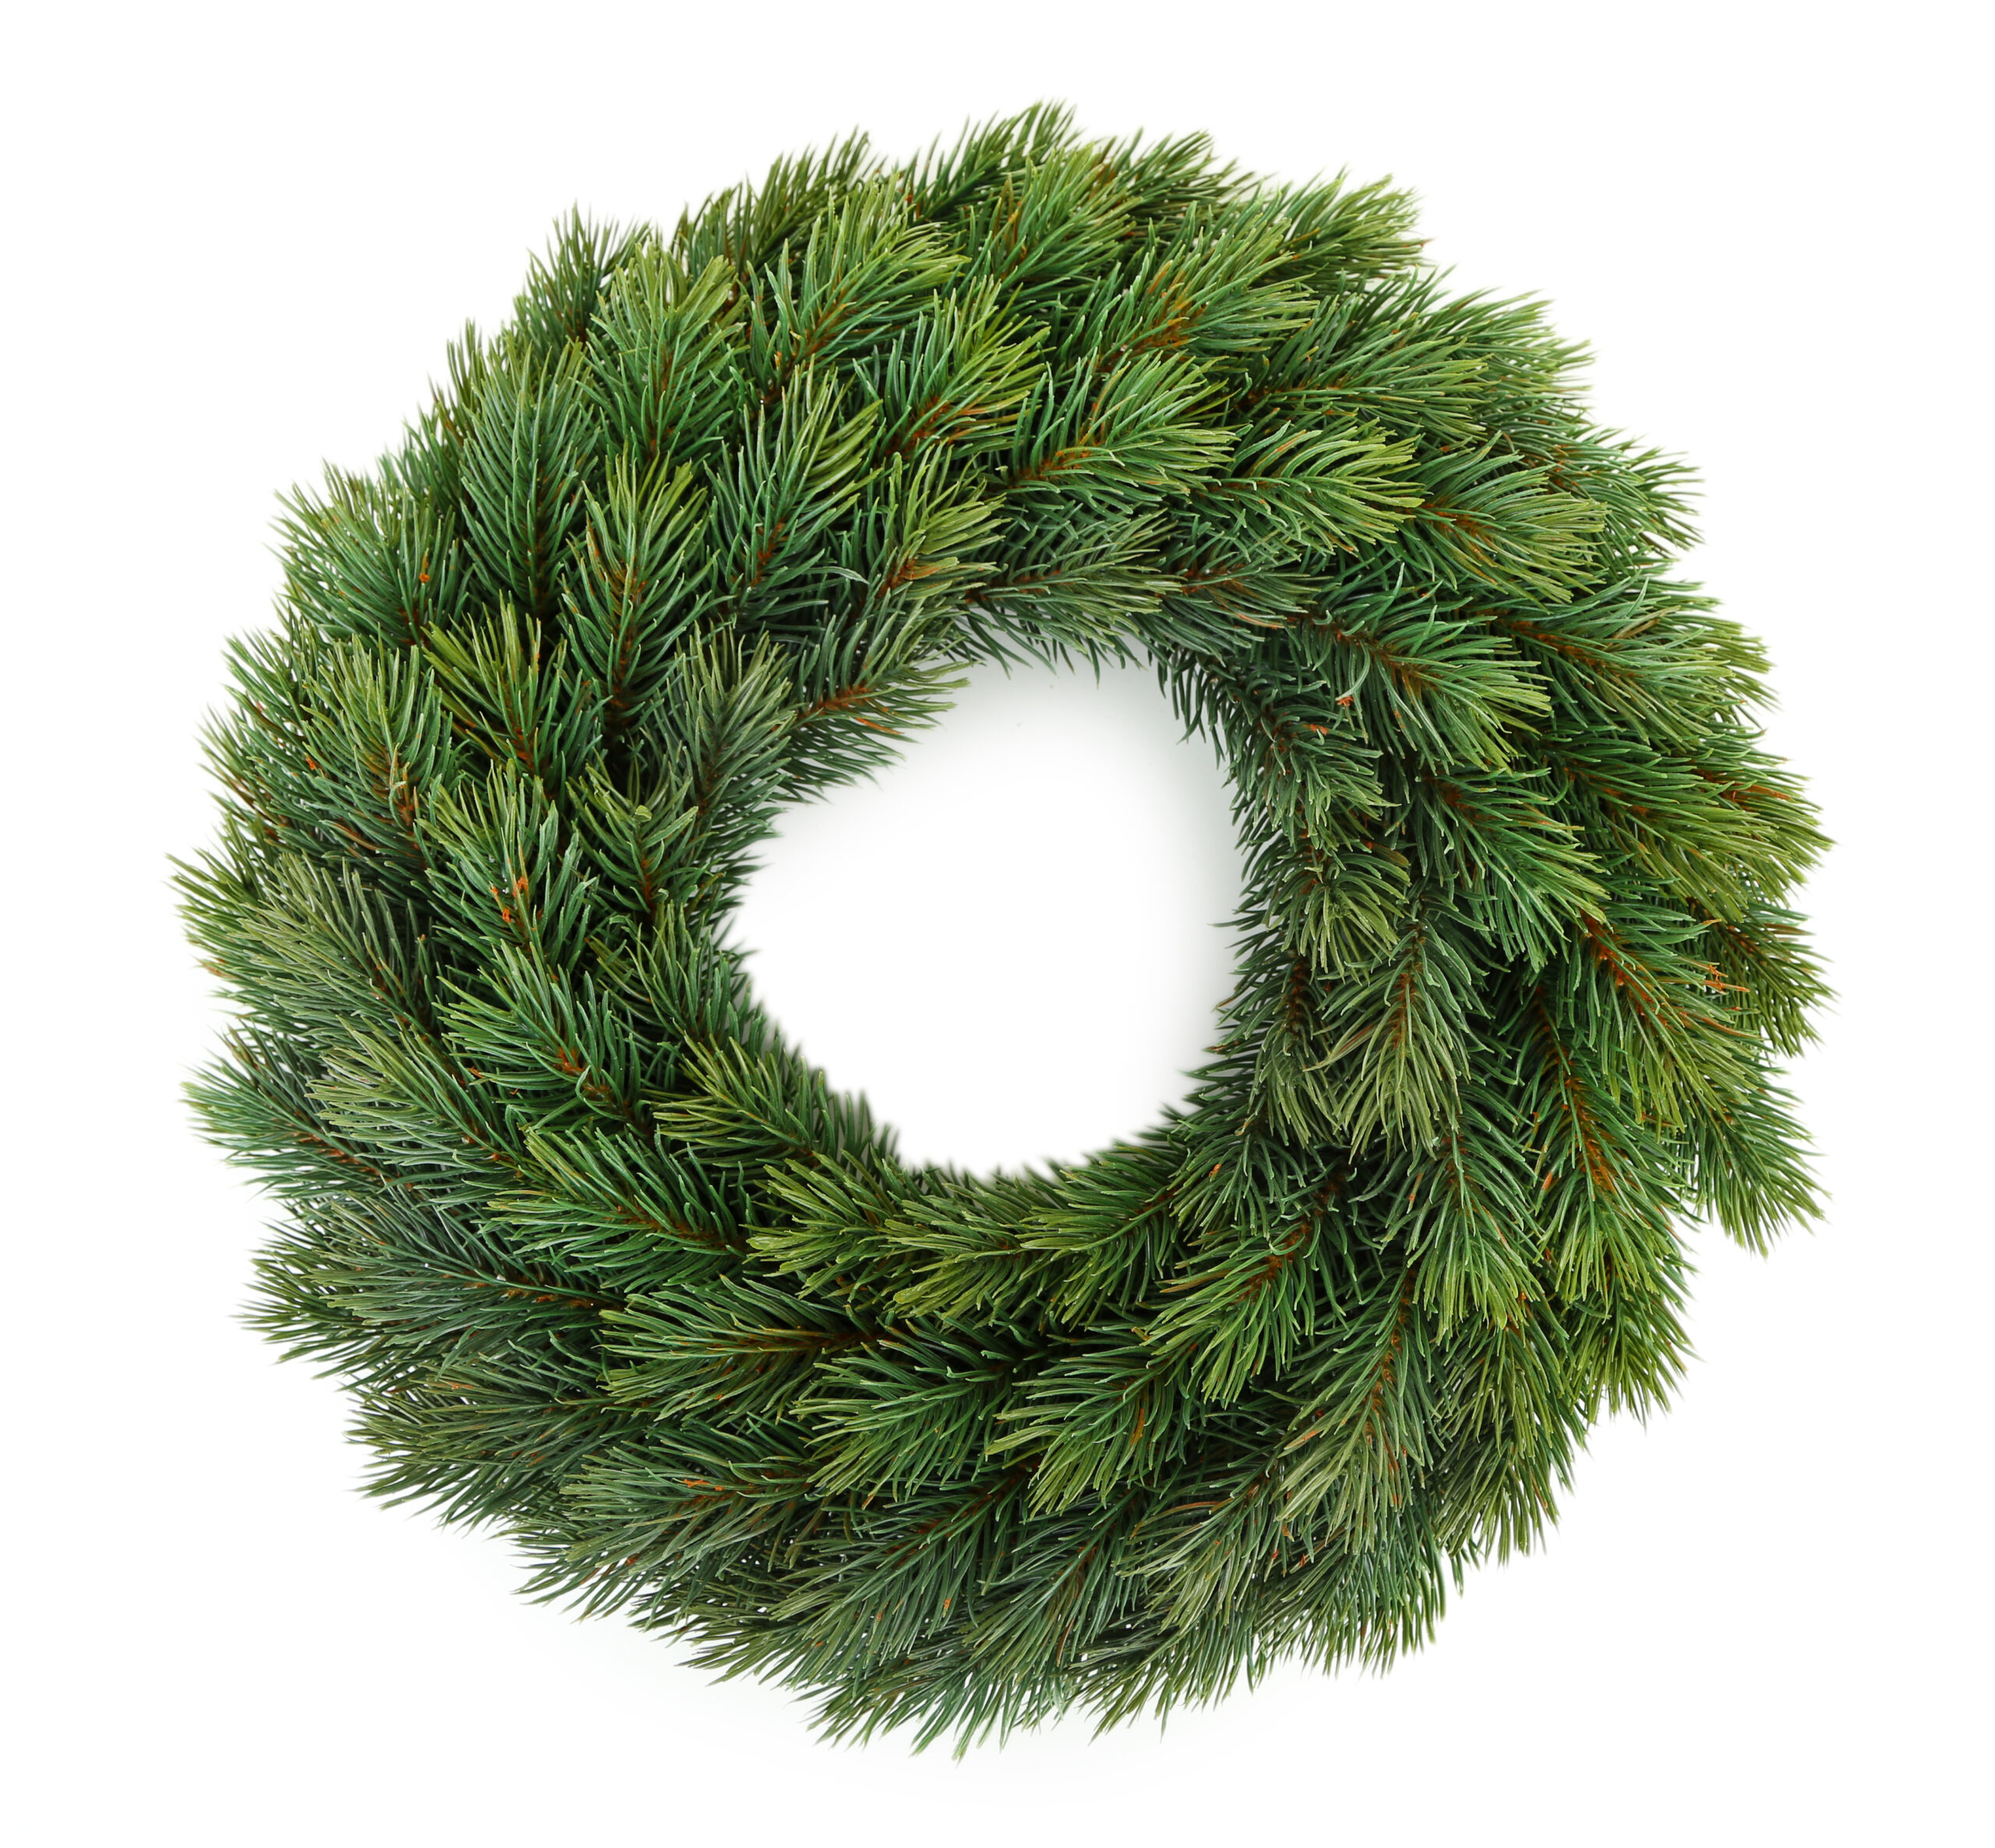 Decorative Christmas wreath